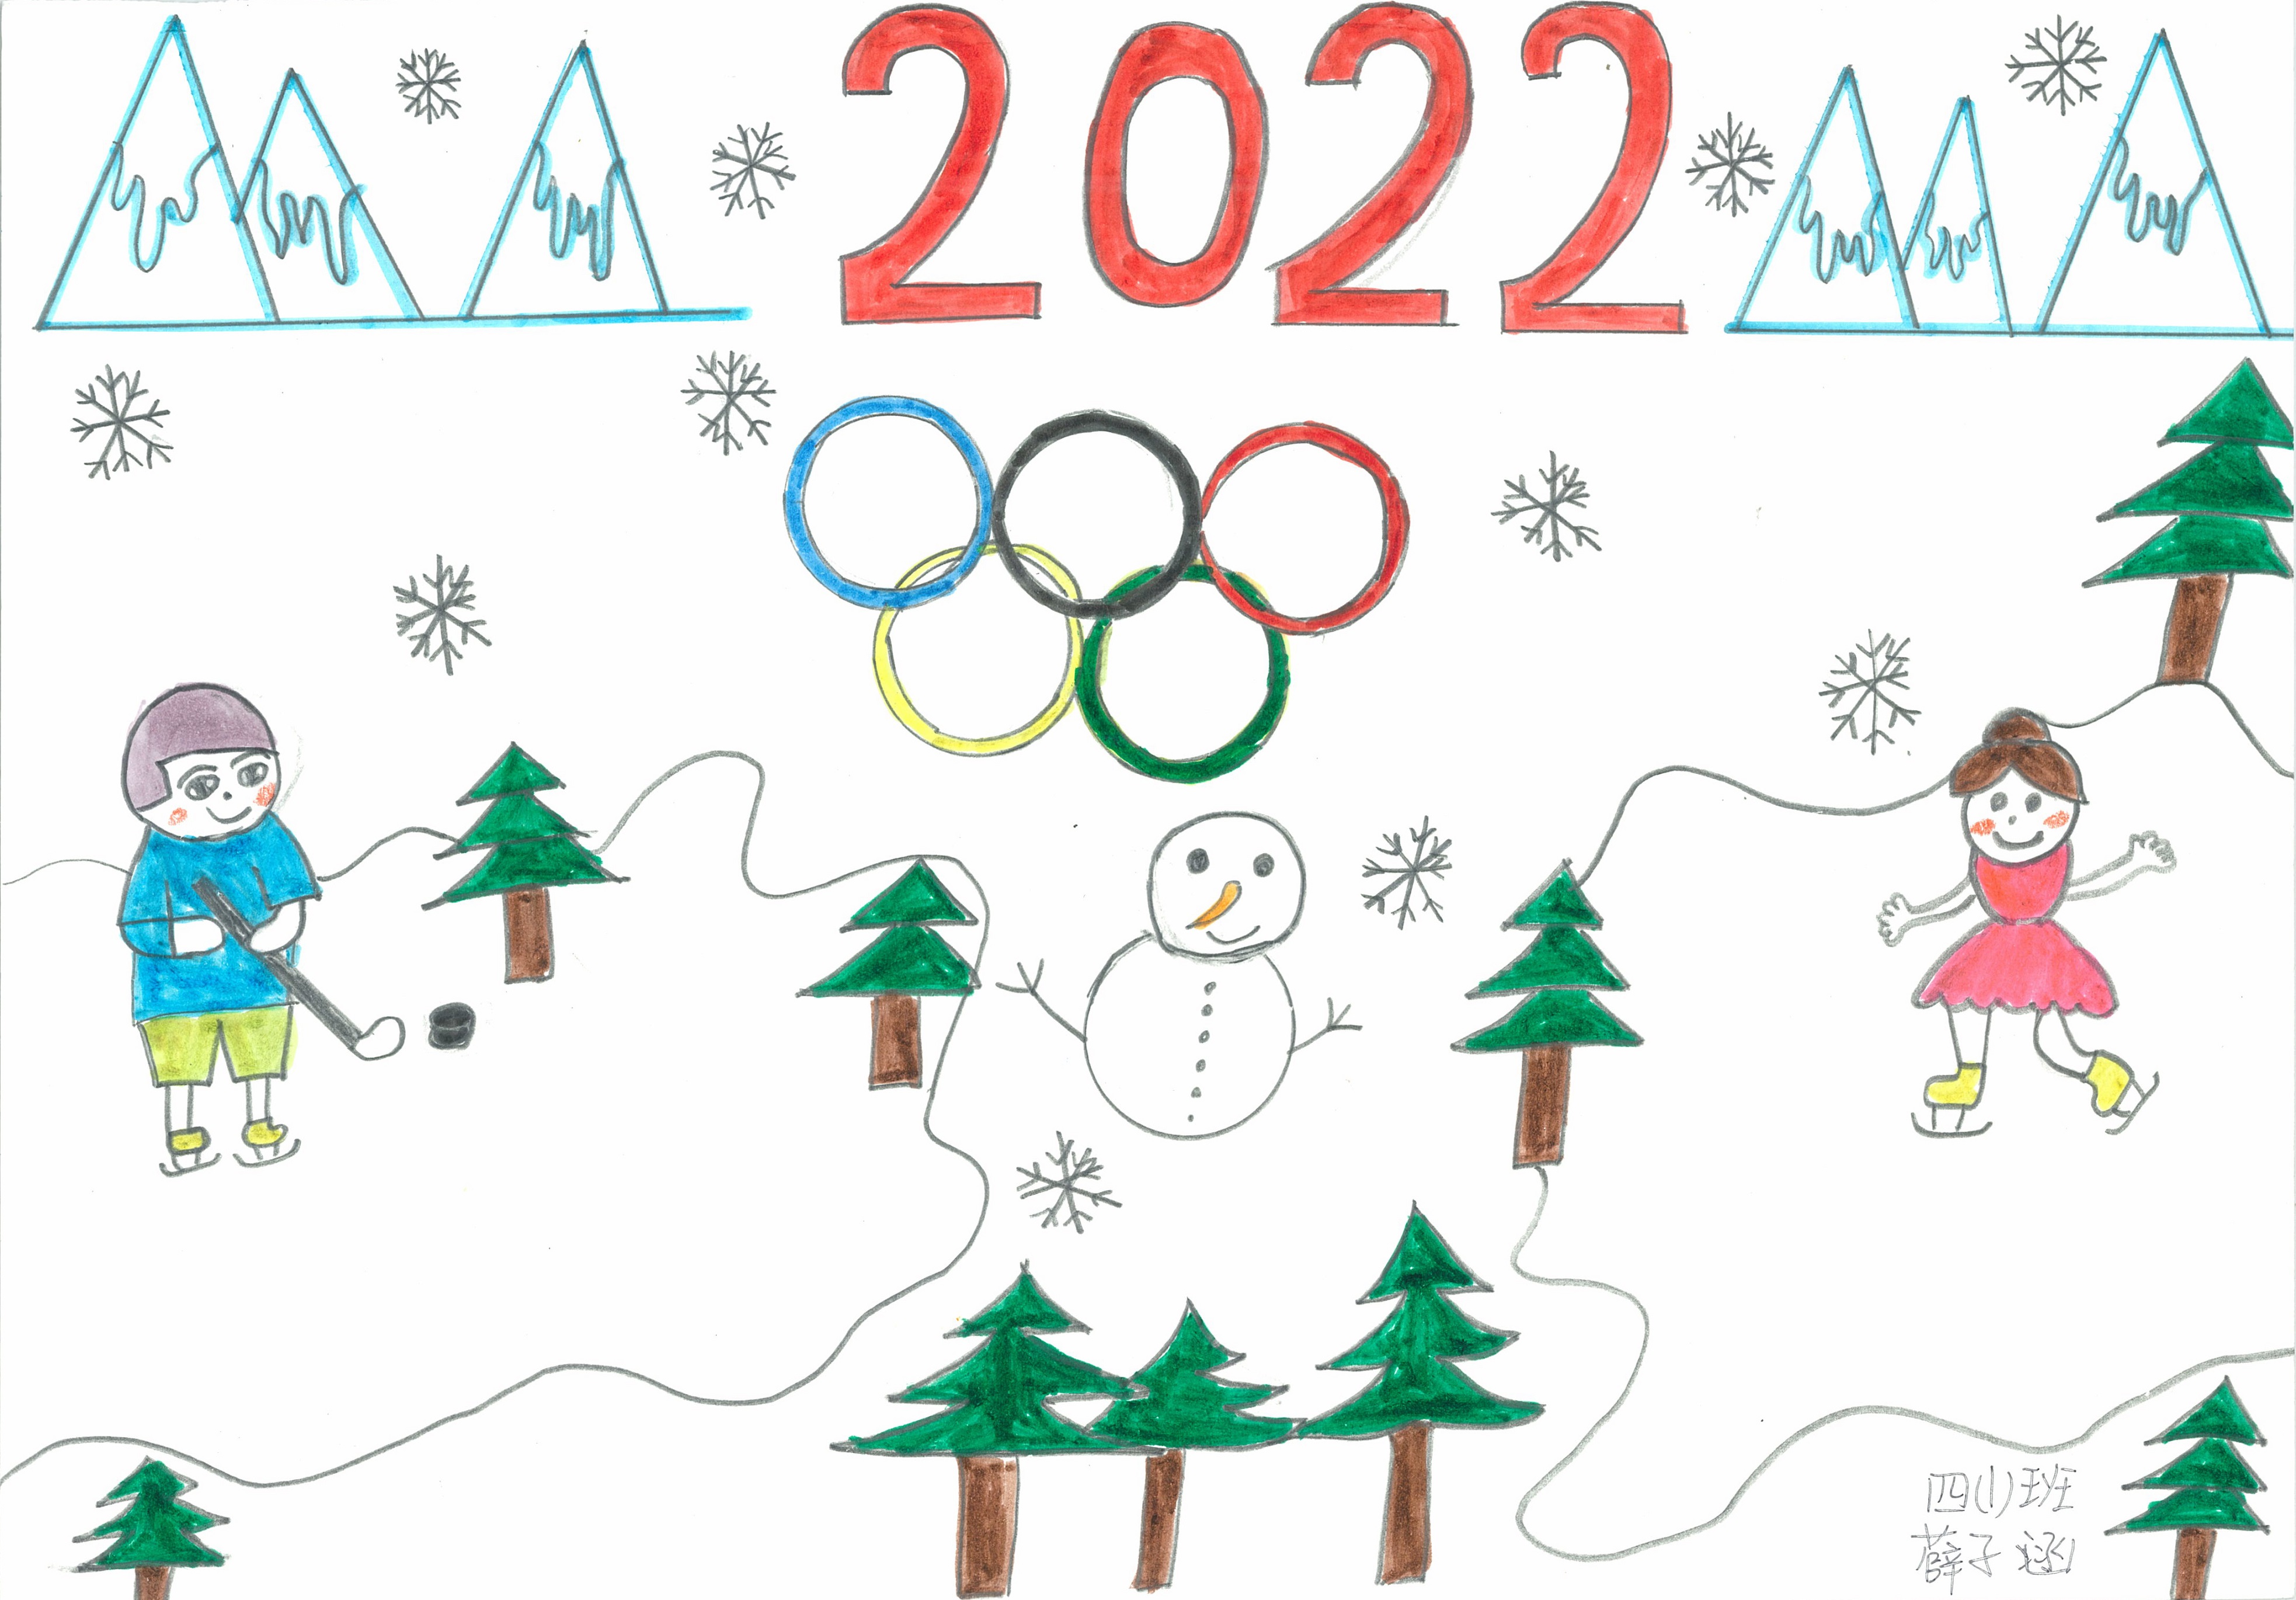 《我心中的冬奥荣耀时刻》Glory moments of the Winter Olympics in my heart +薛子涵 Xue Zihan